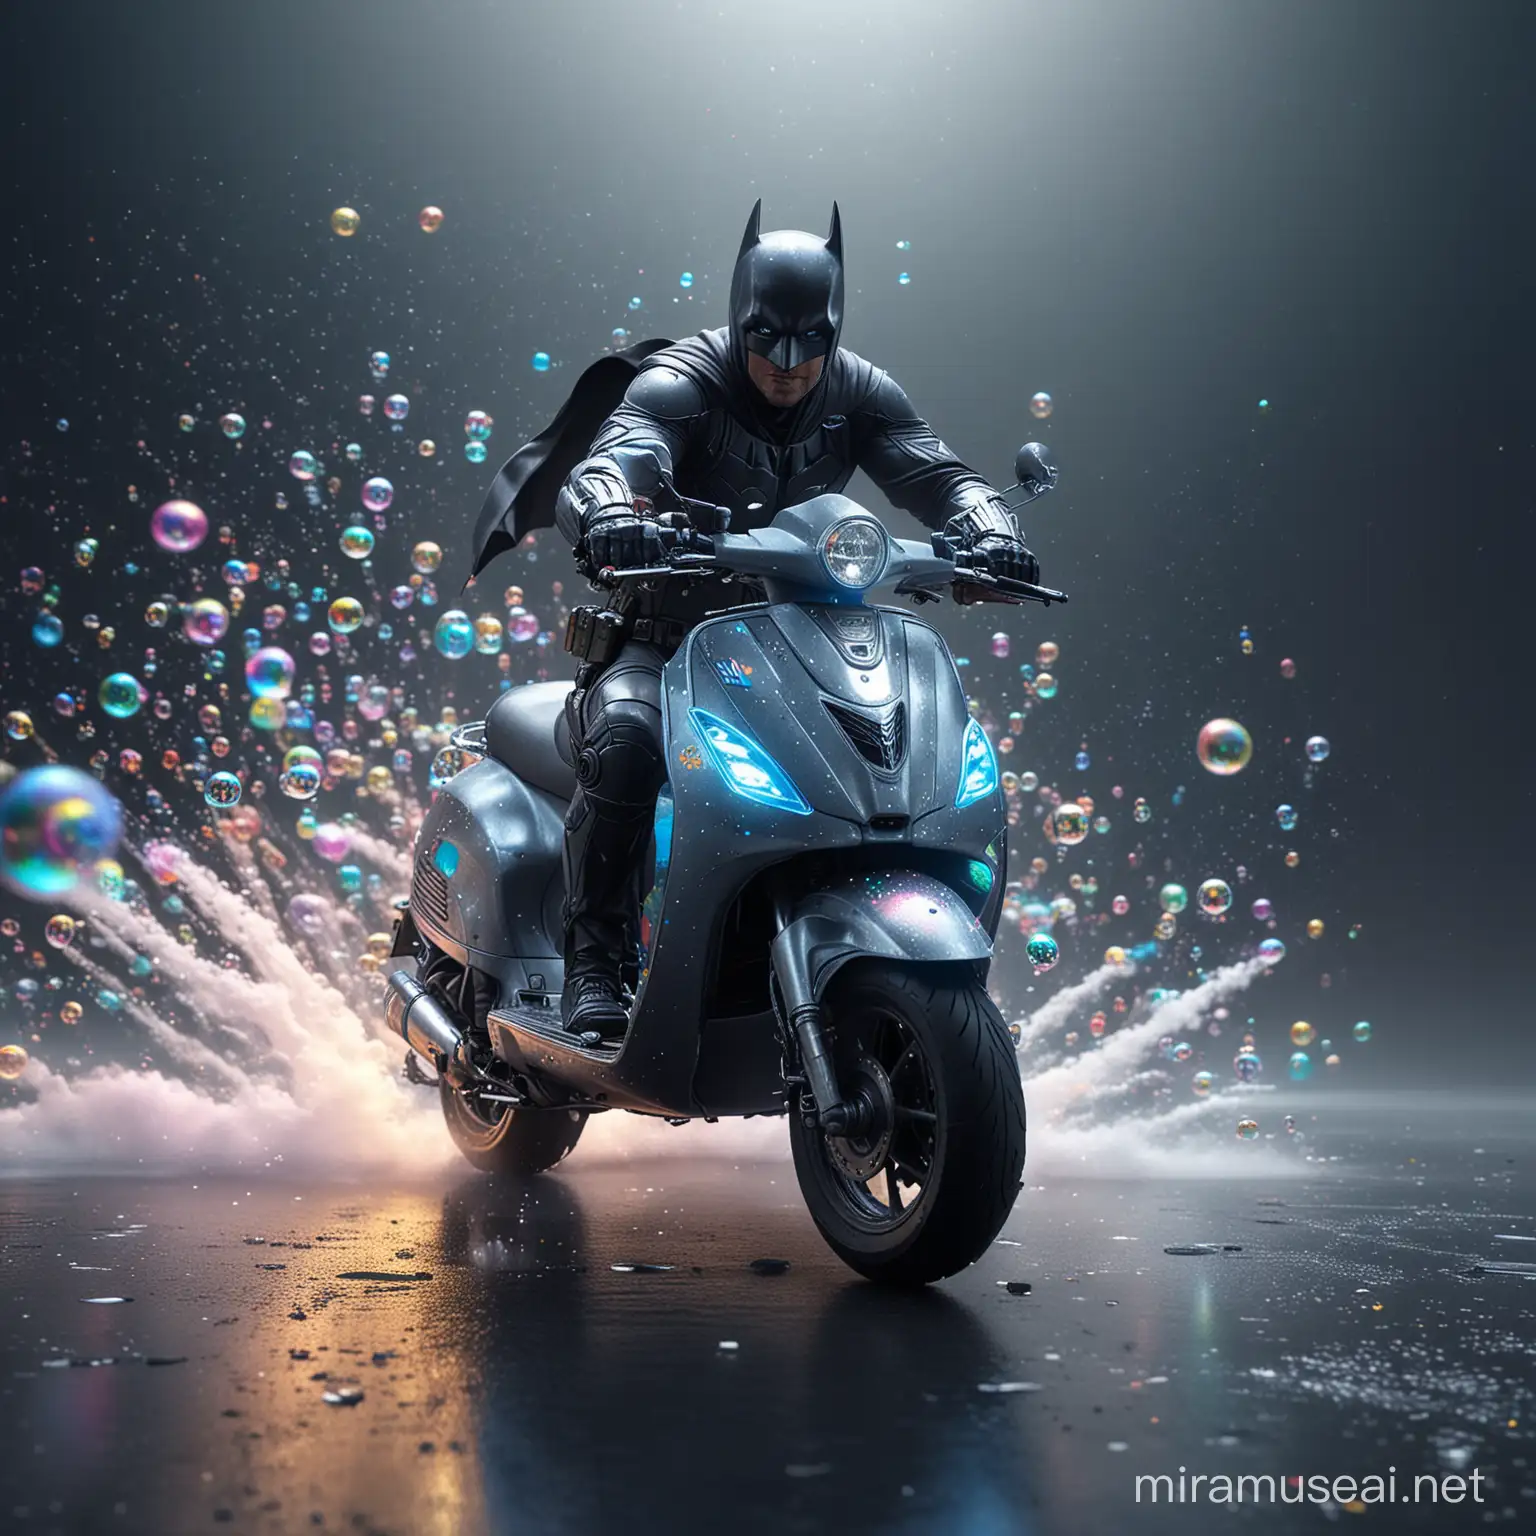 Seorang hero batman mengendarai motor vespa yang glowing berwarna perak dengan kecepatan tinggi. Efek kecepatan gelembung sabun berwarna pelangi all color. Latar belakang plain blue metalic. Uhd 8k. Photorealistic.